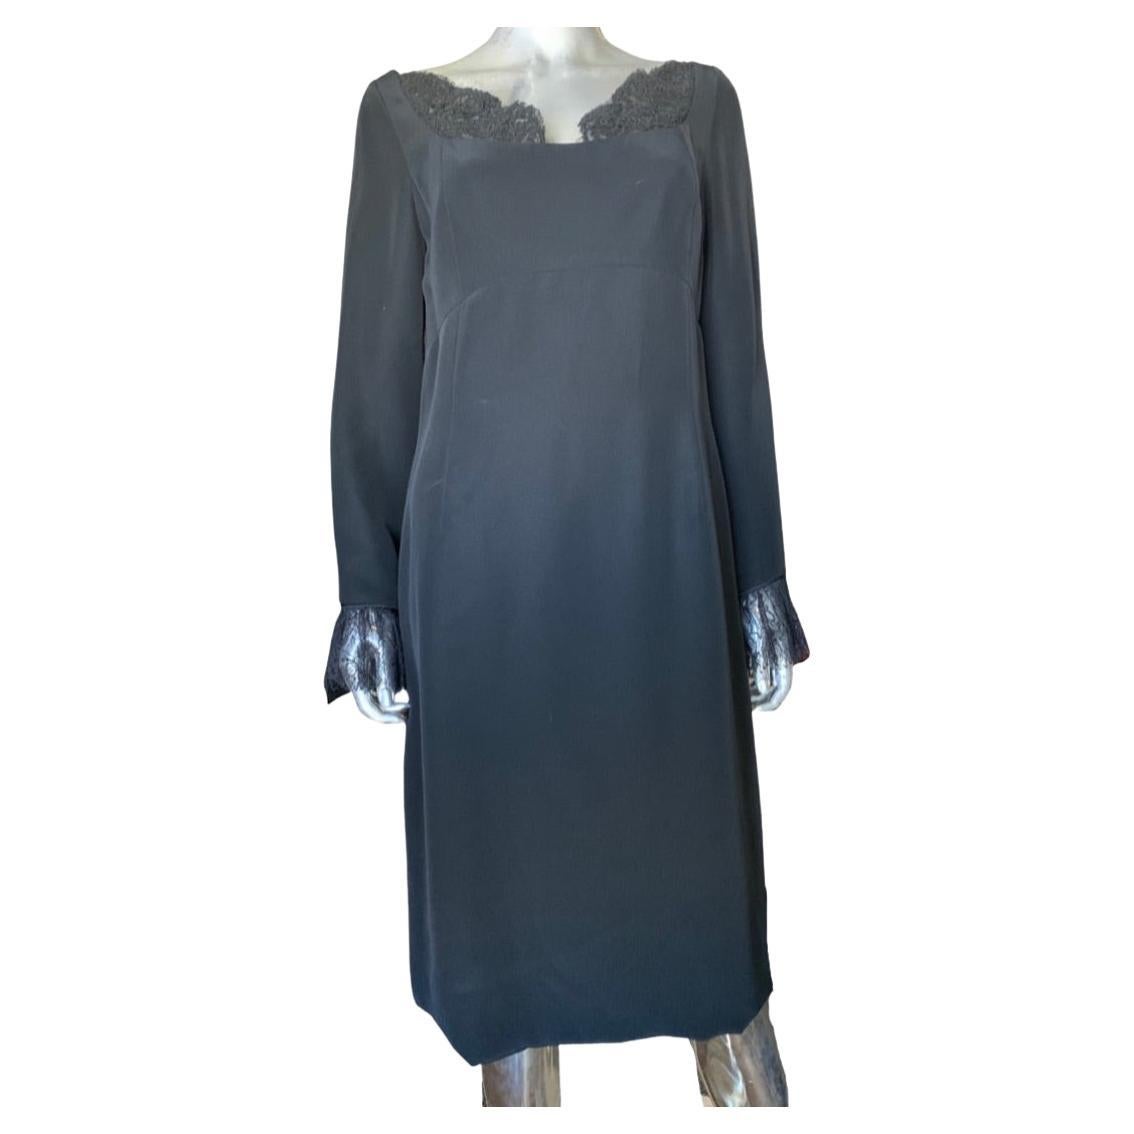 Joanna Mastroianni Black Sheath Dress w/Lace Trim Size 14 For Sale